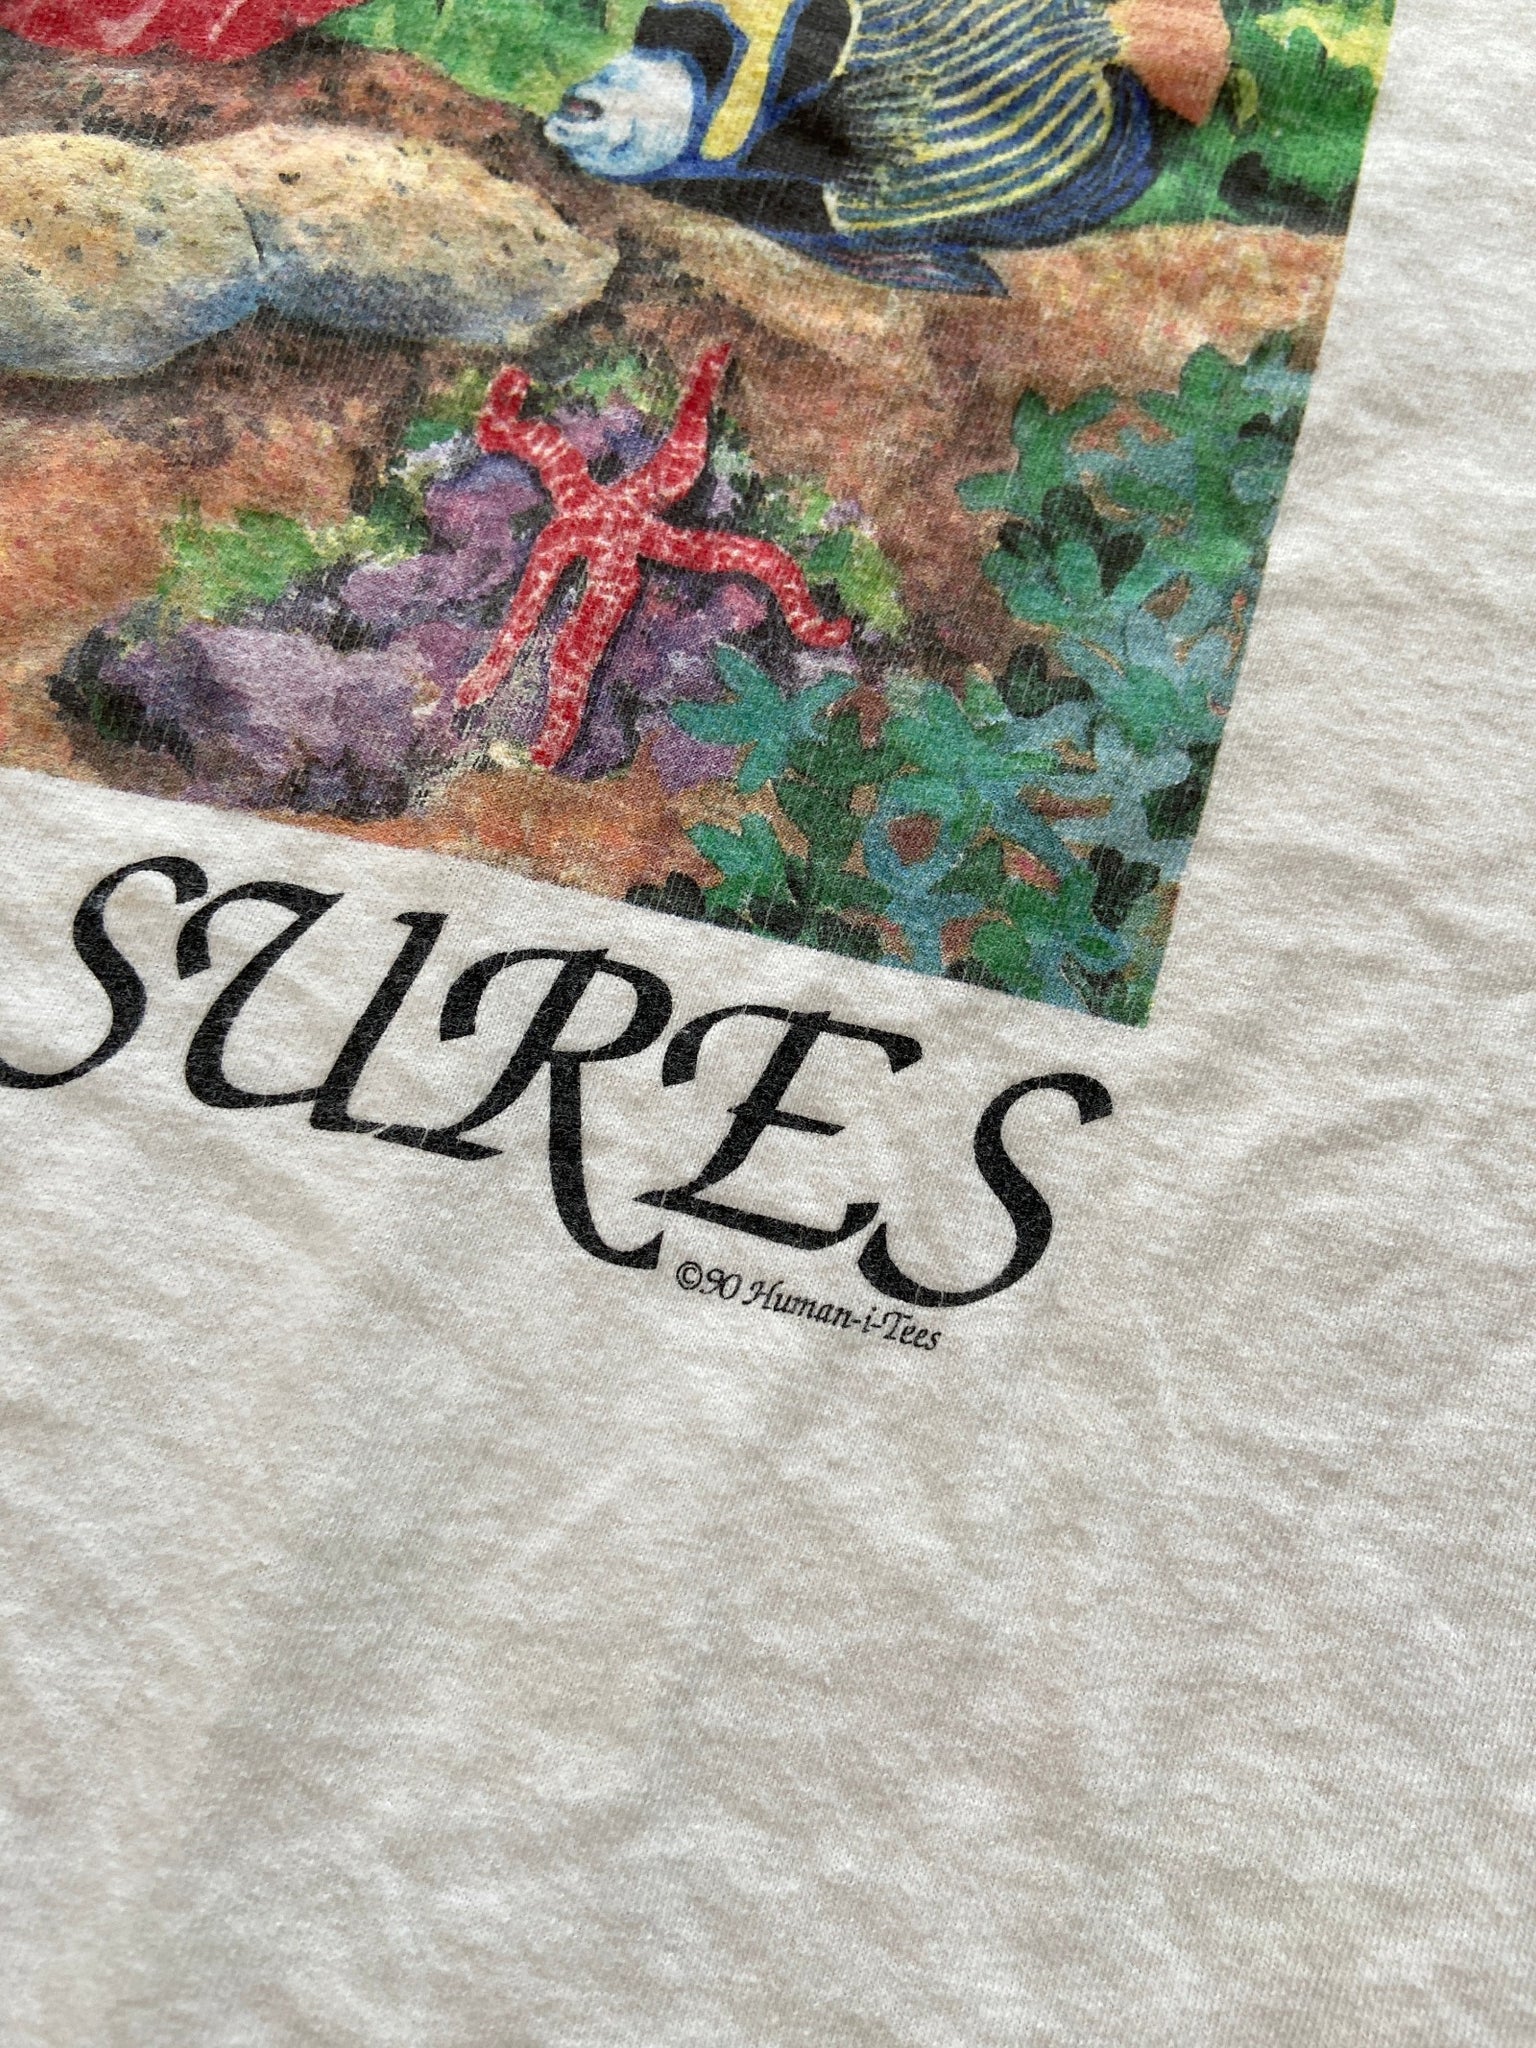 1990 Protect Our Natural Treasures T-Shirt - XL